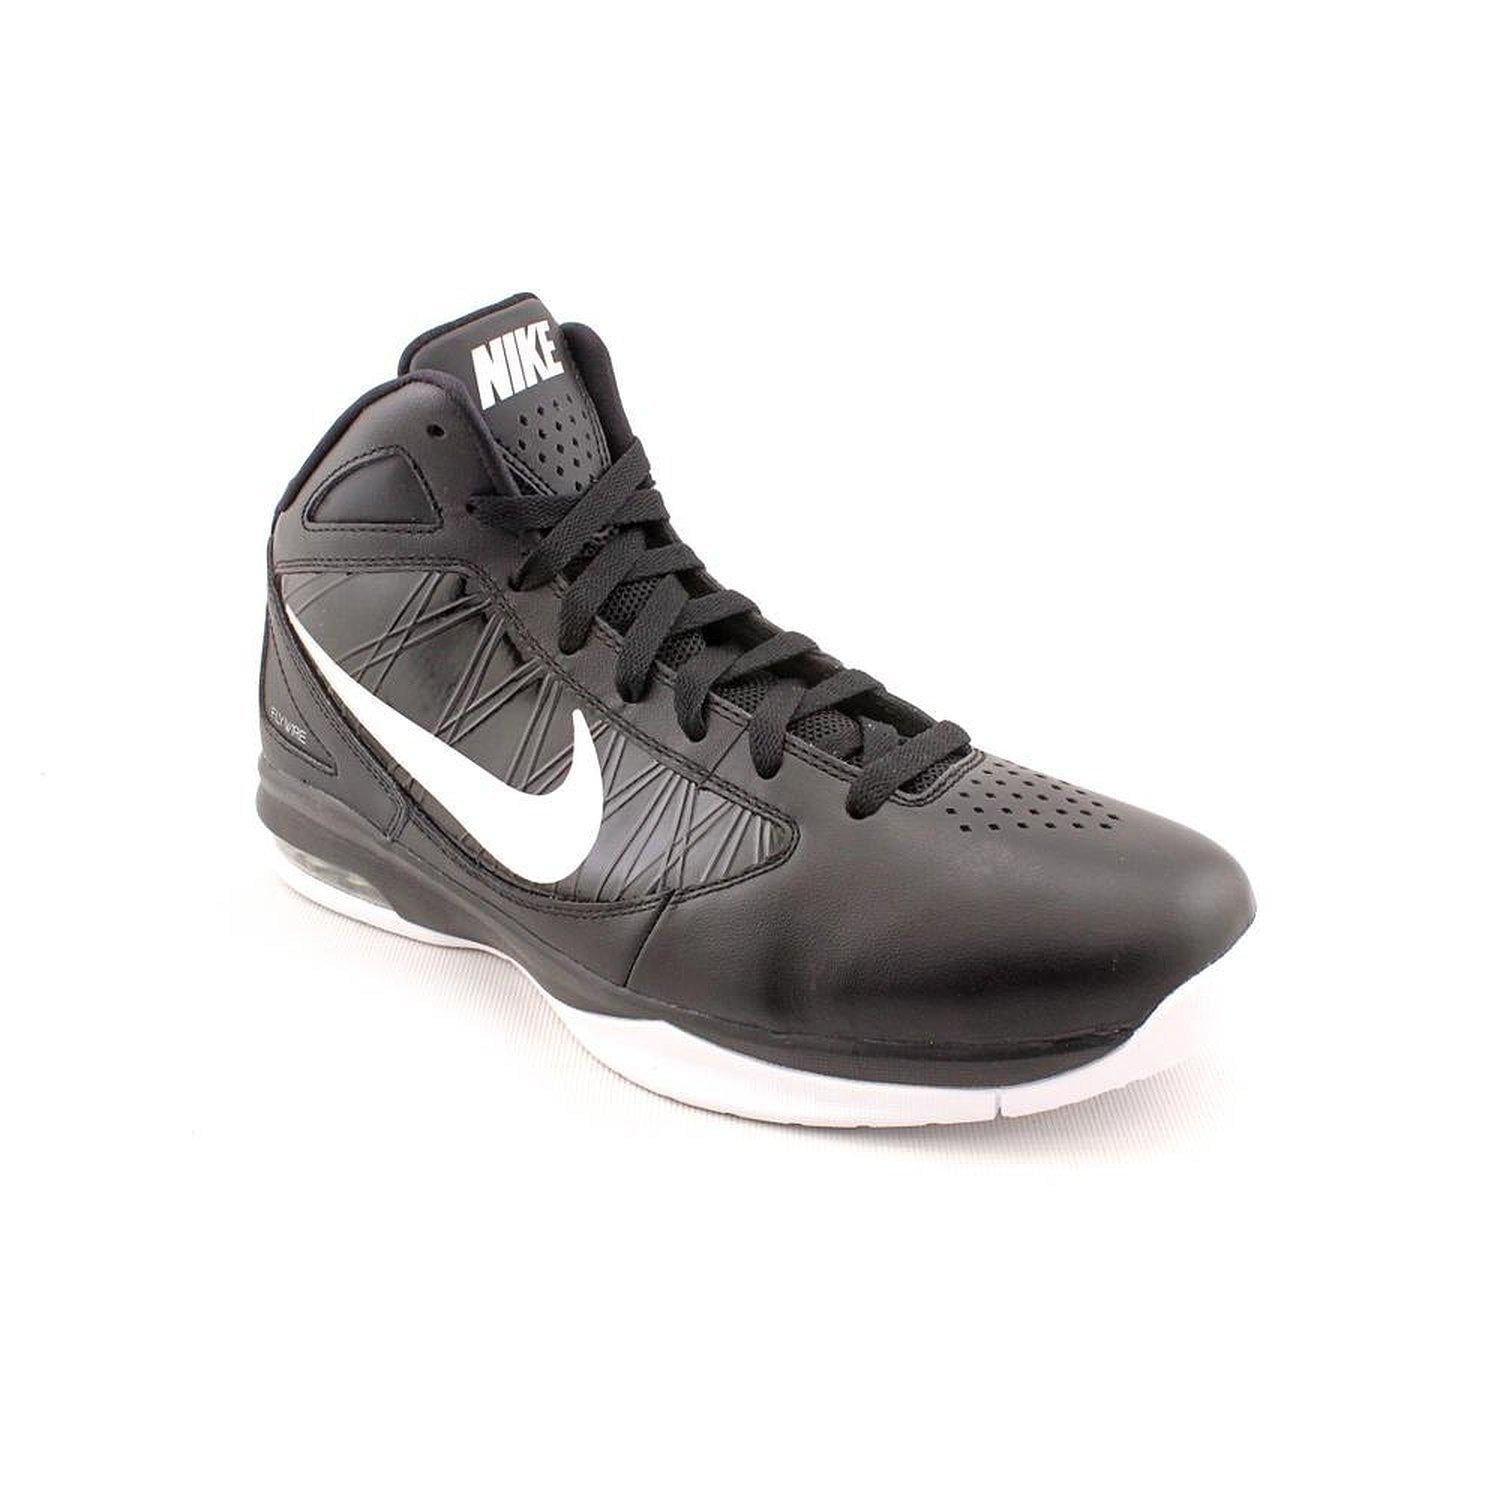 oorsprong Terug, terug, terug deel zondag Nike Air Max Destiny TB Mens Basketball Shoes - Walmart.com